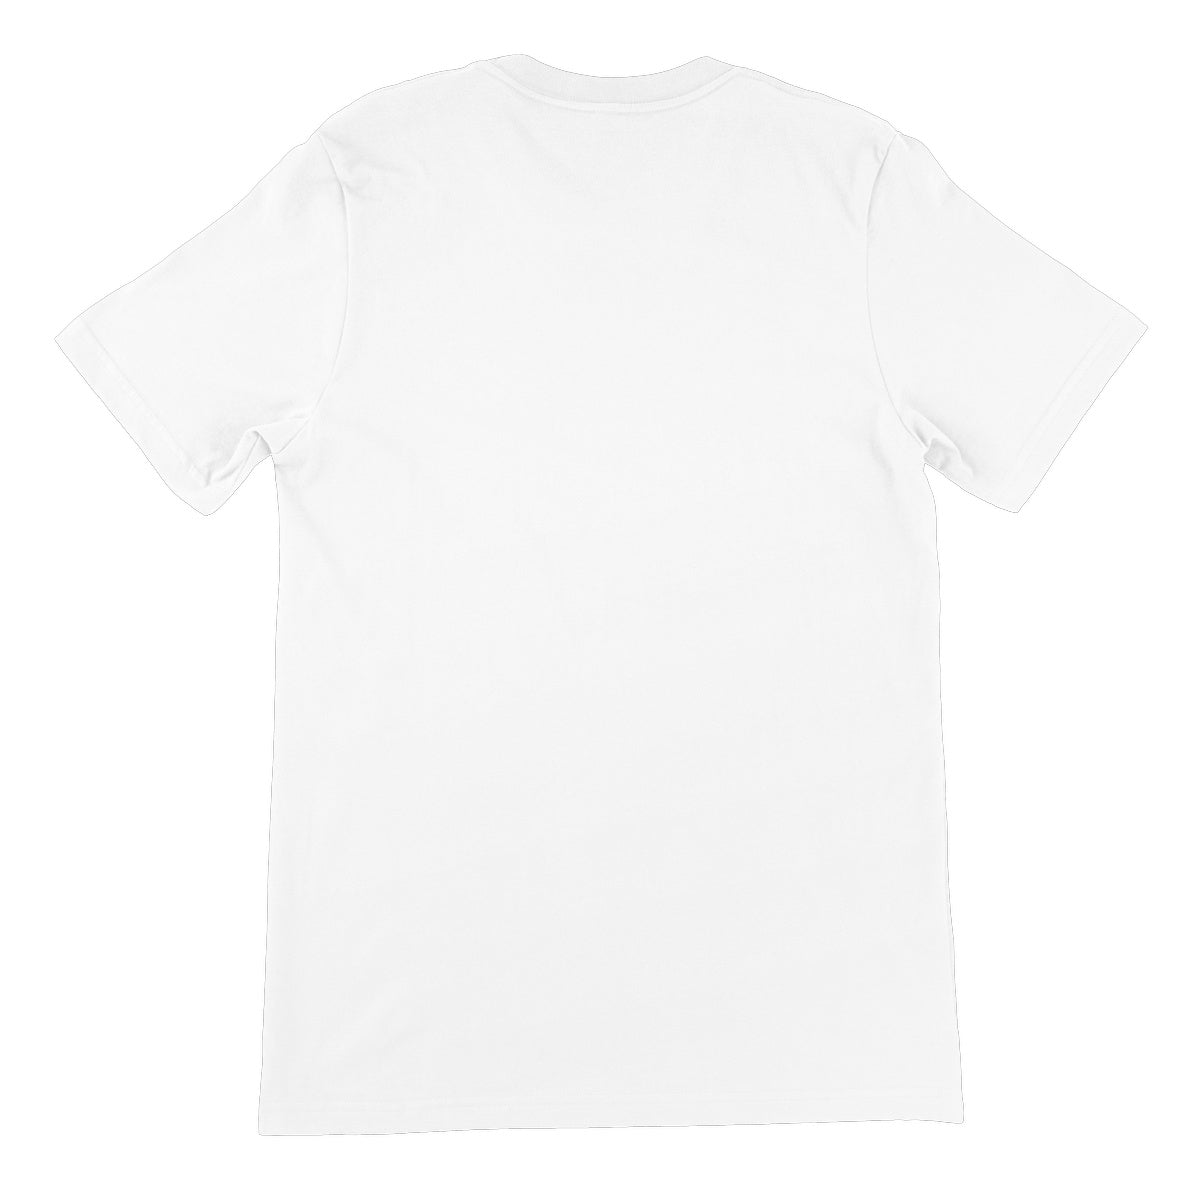 Binary Cascade, Blue and White Unisex Short Sleeve T-Shirt